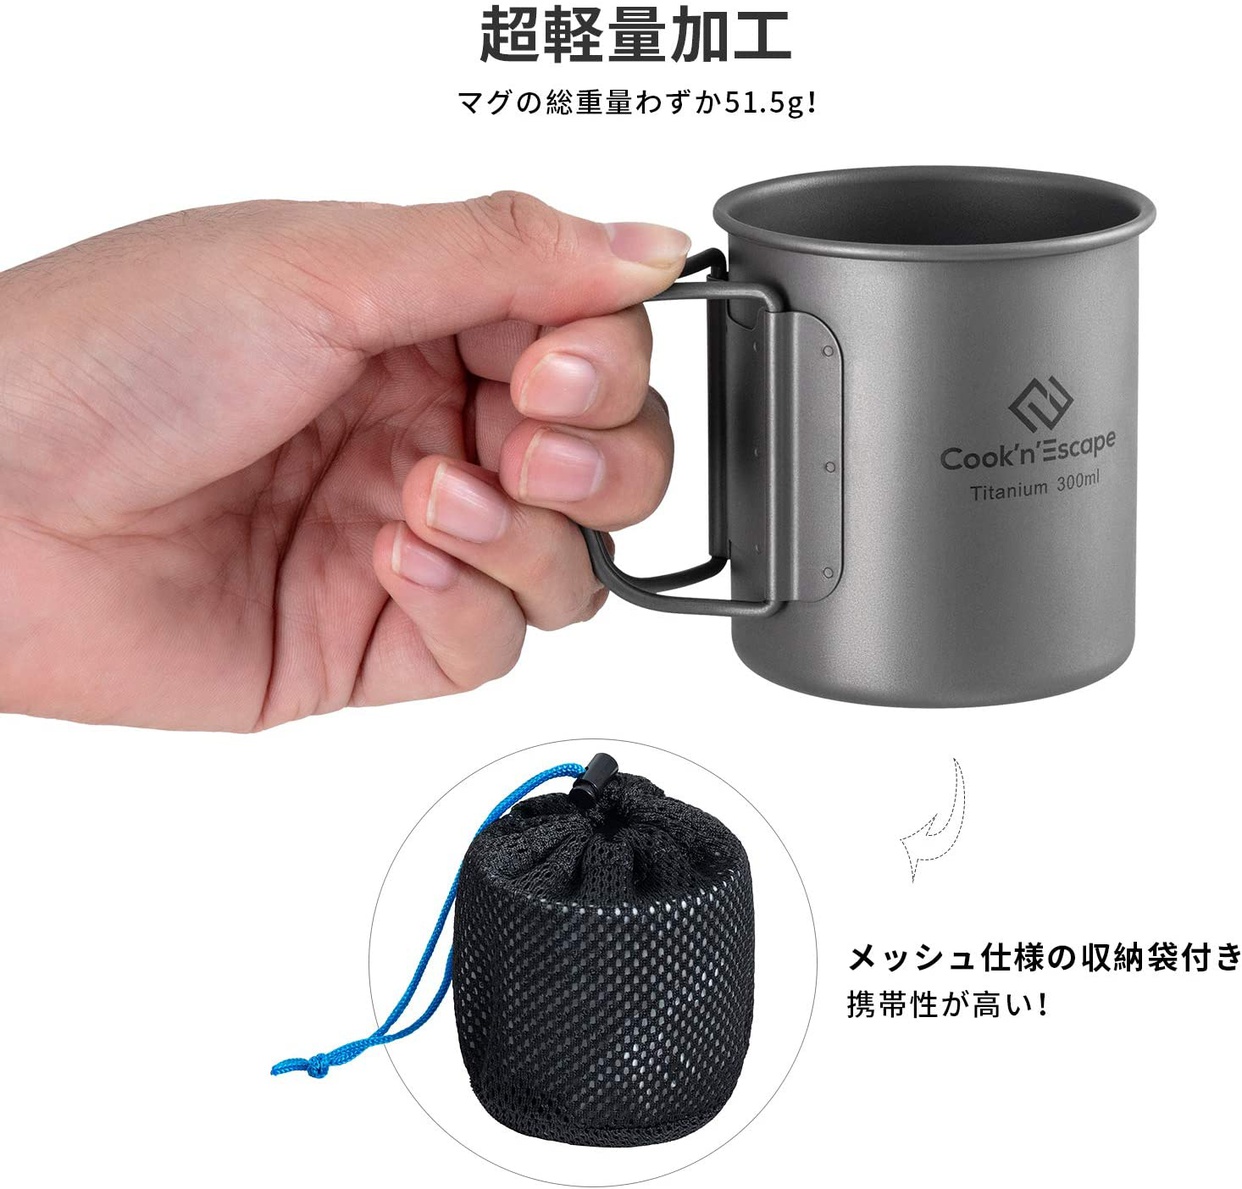 COOK'N'ESCAPE(コックンエスケープ) チタンマグカップの商品画像3 